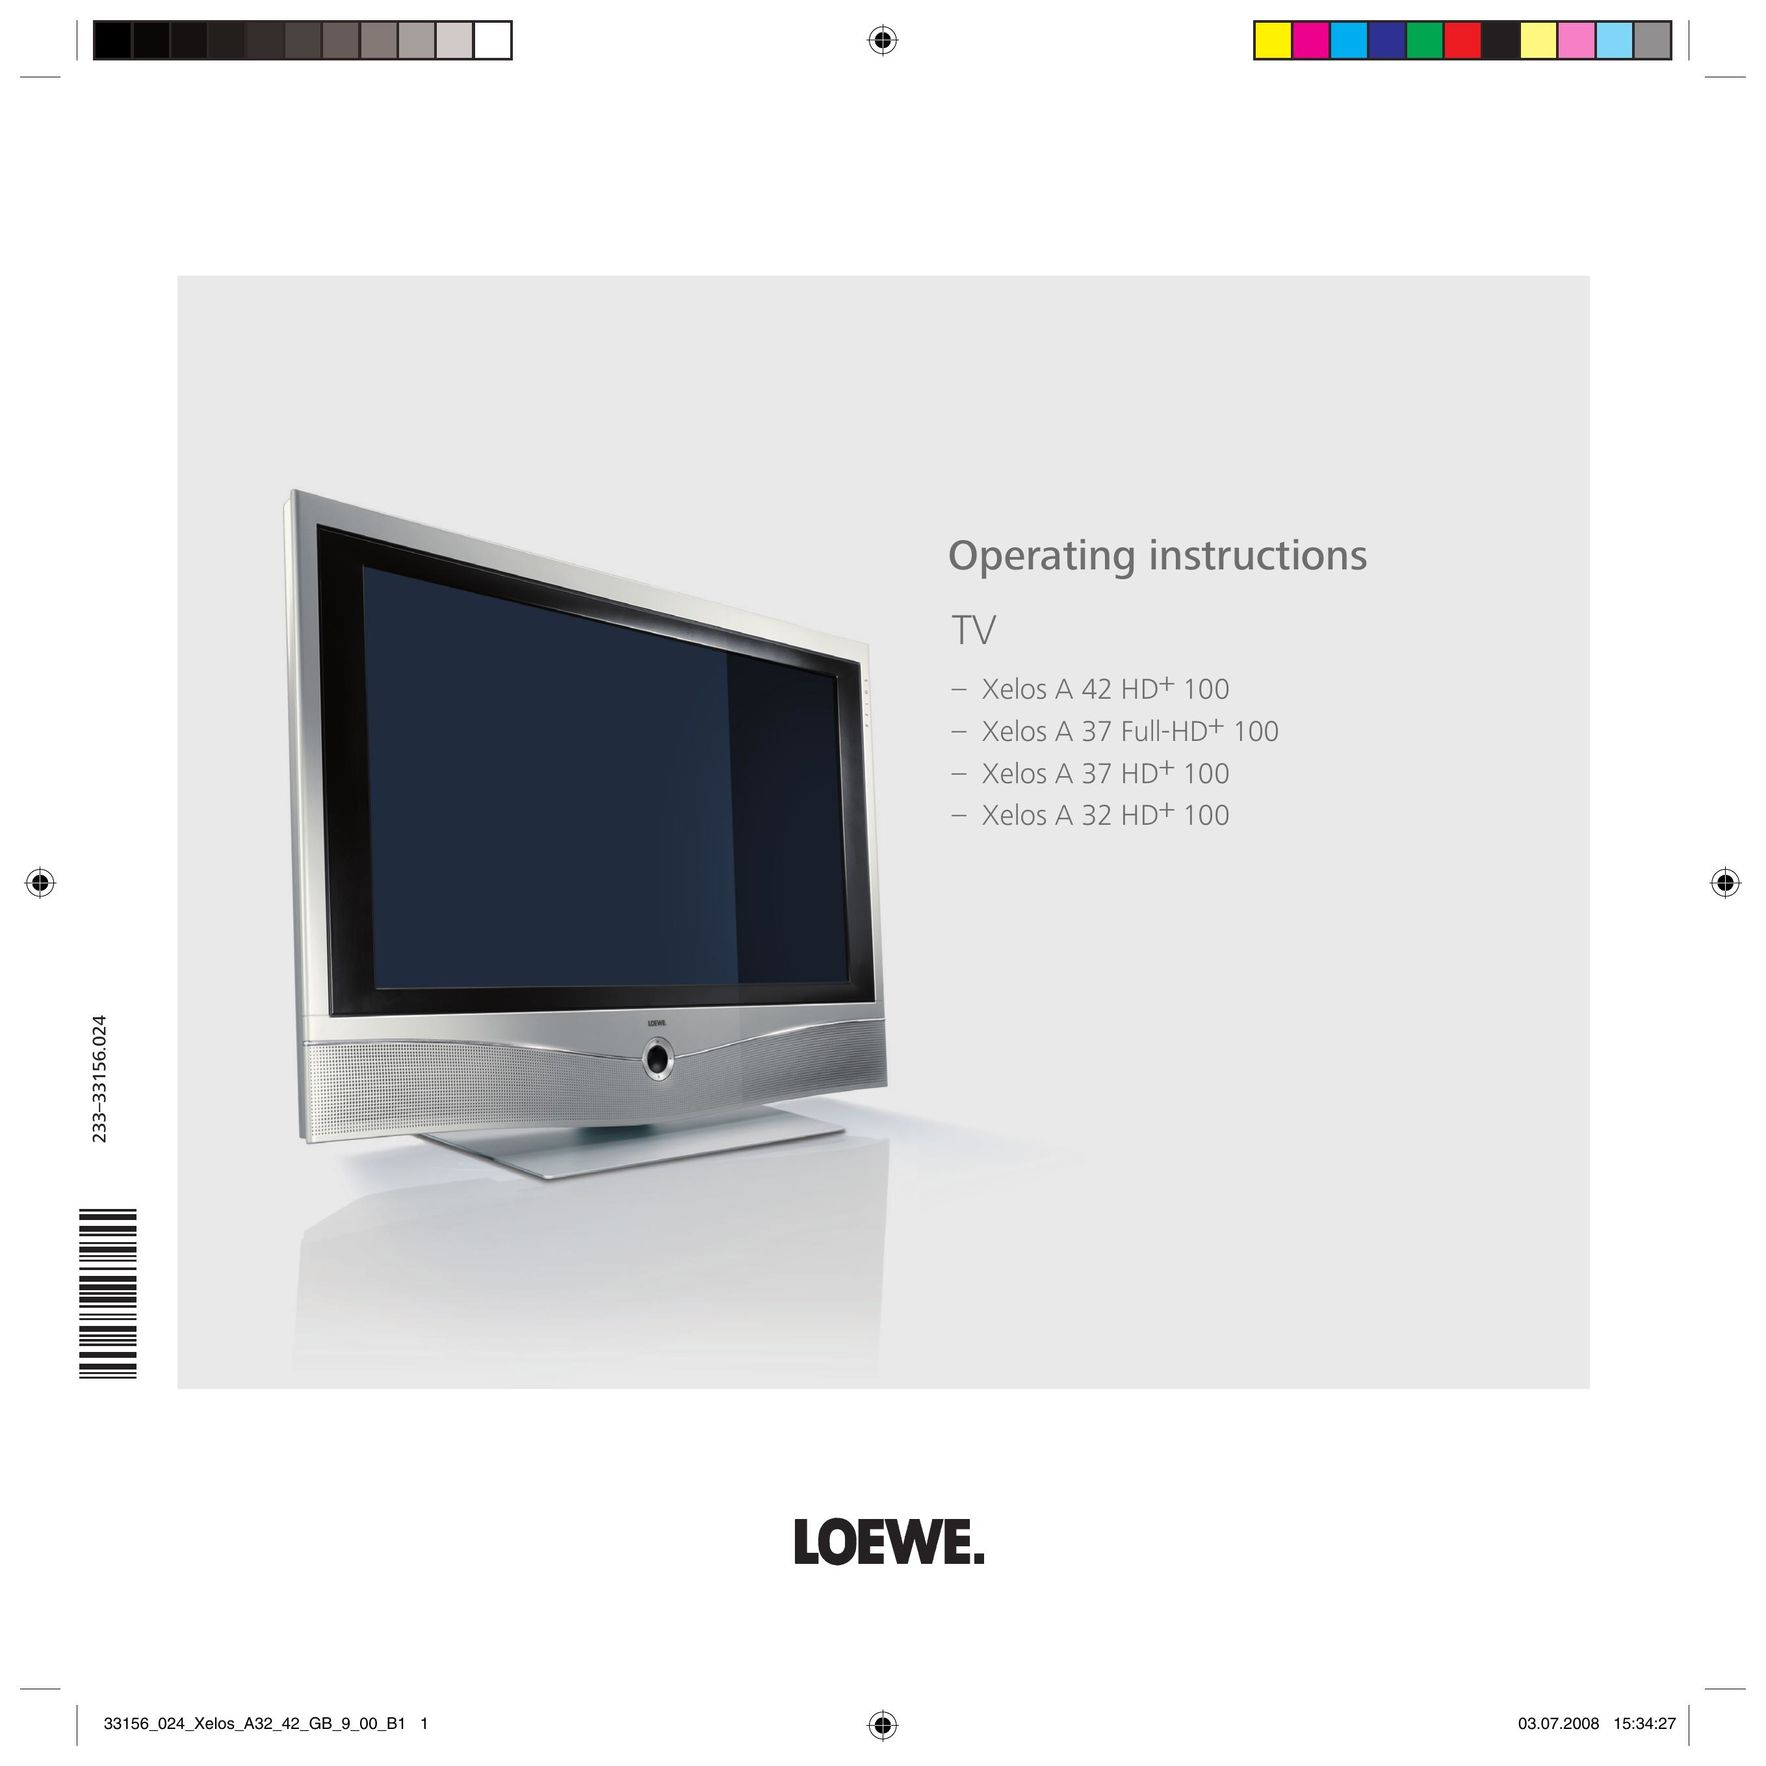 Loewe A 37 Full-HD+ 100 Flat Panel Television User Manual